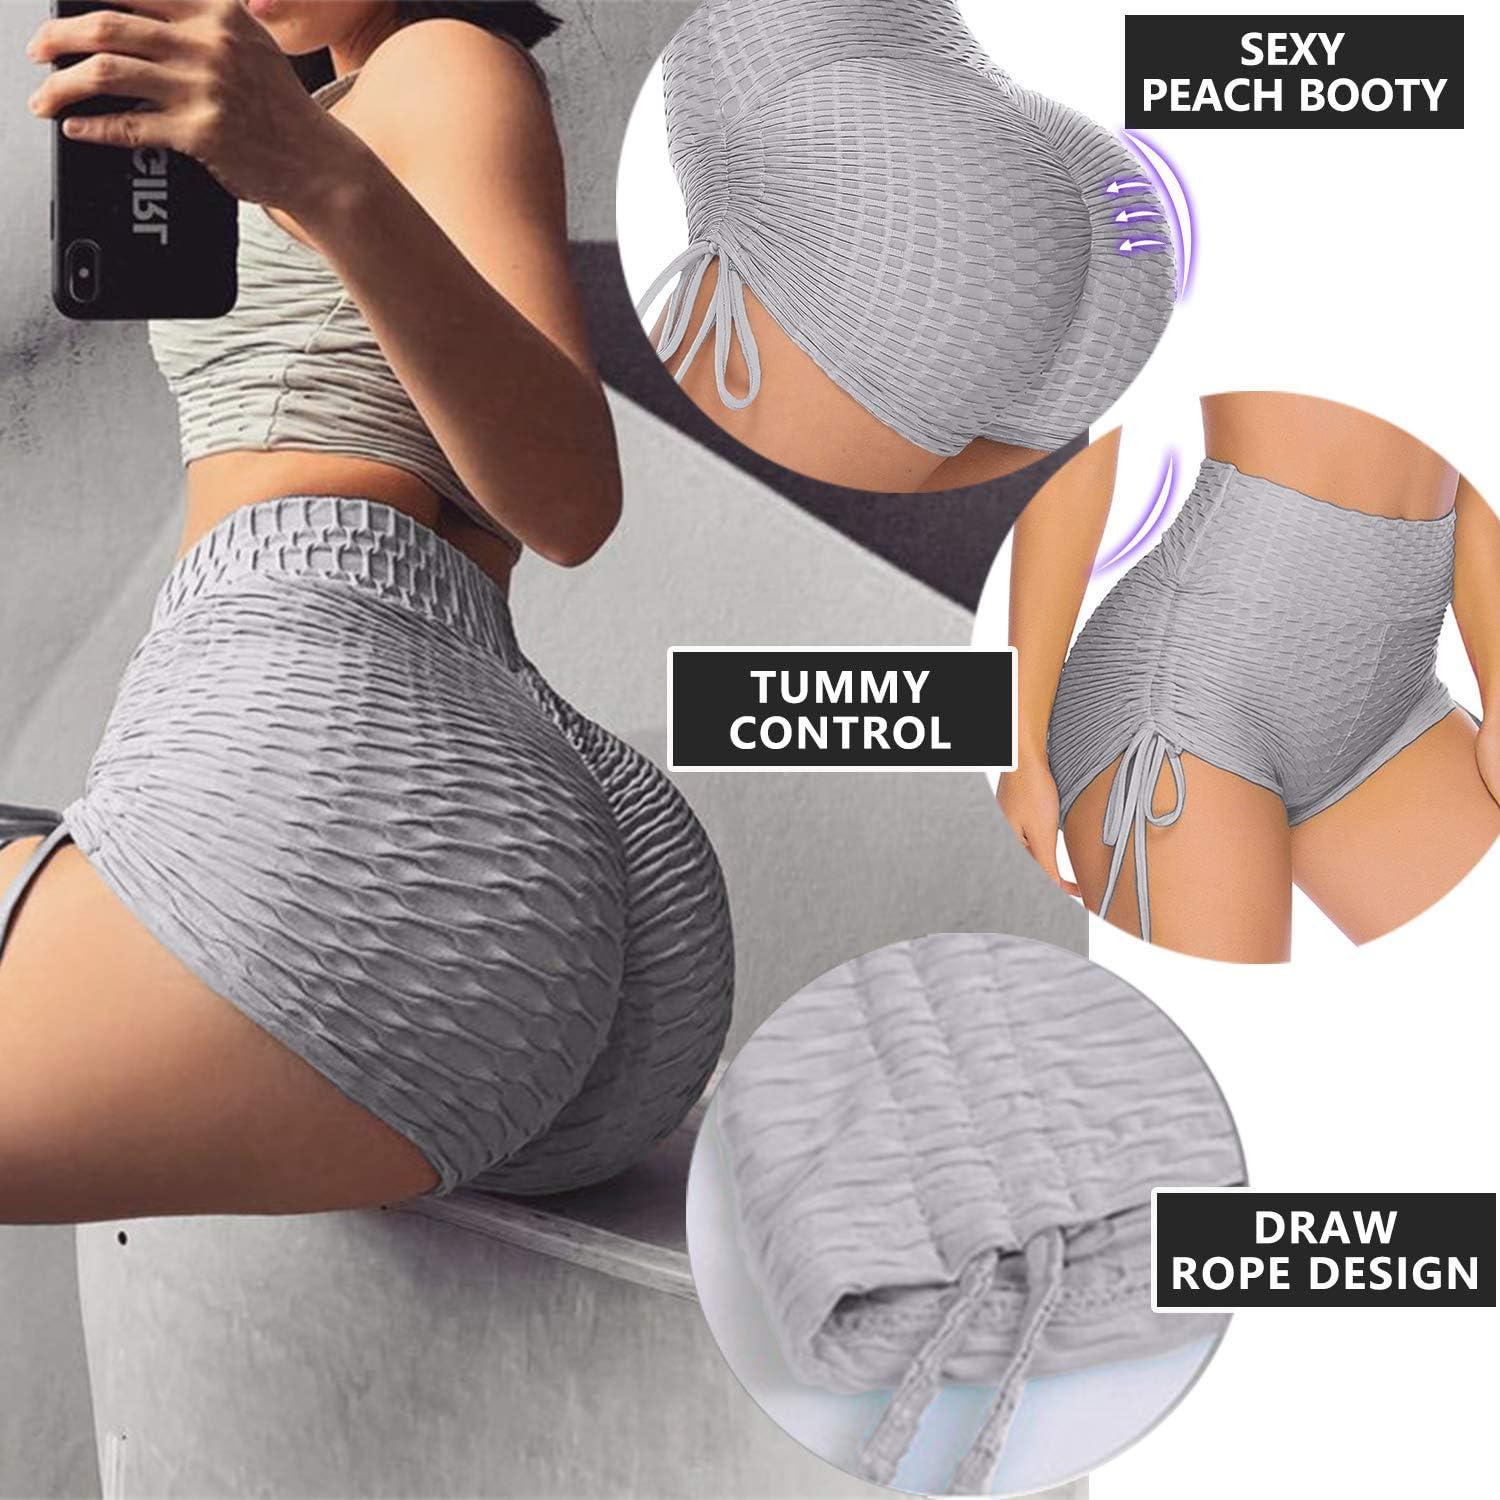 Women's Bubble Cloth Peach Fitness Pants Super Short Yoga Shorts